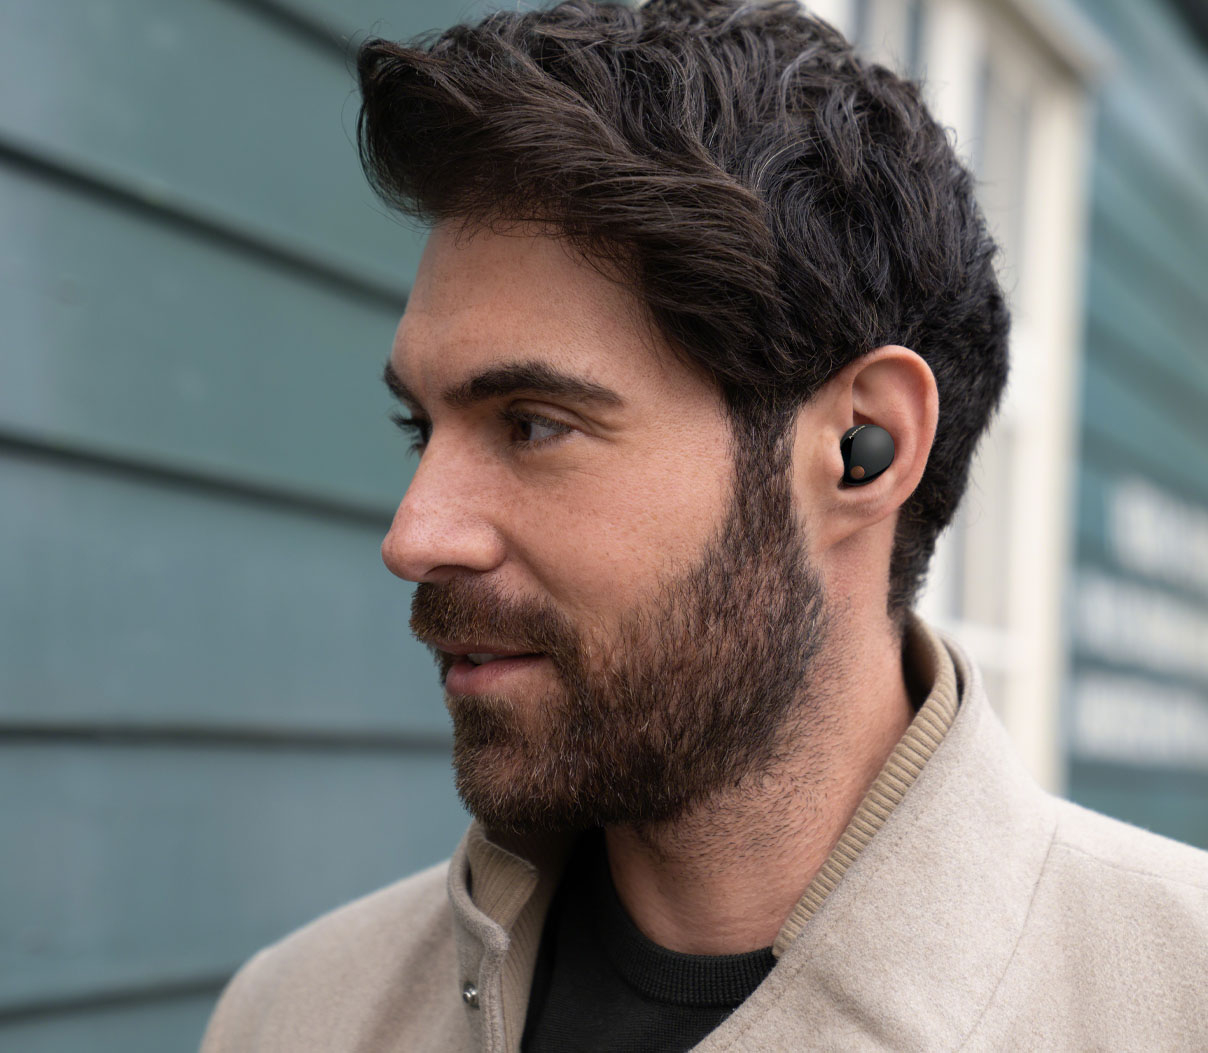 Sony WF-1000XM5 earbuds review